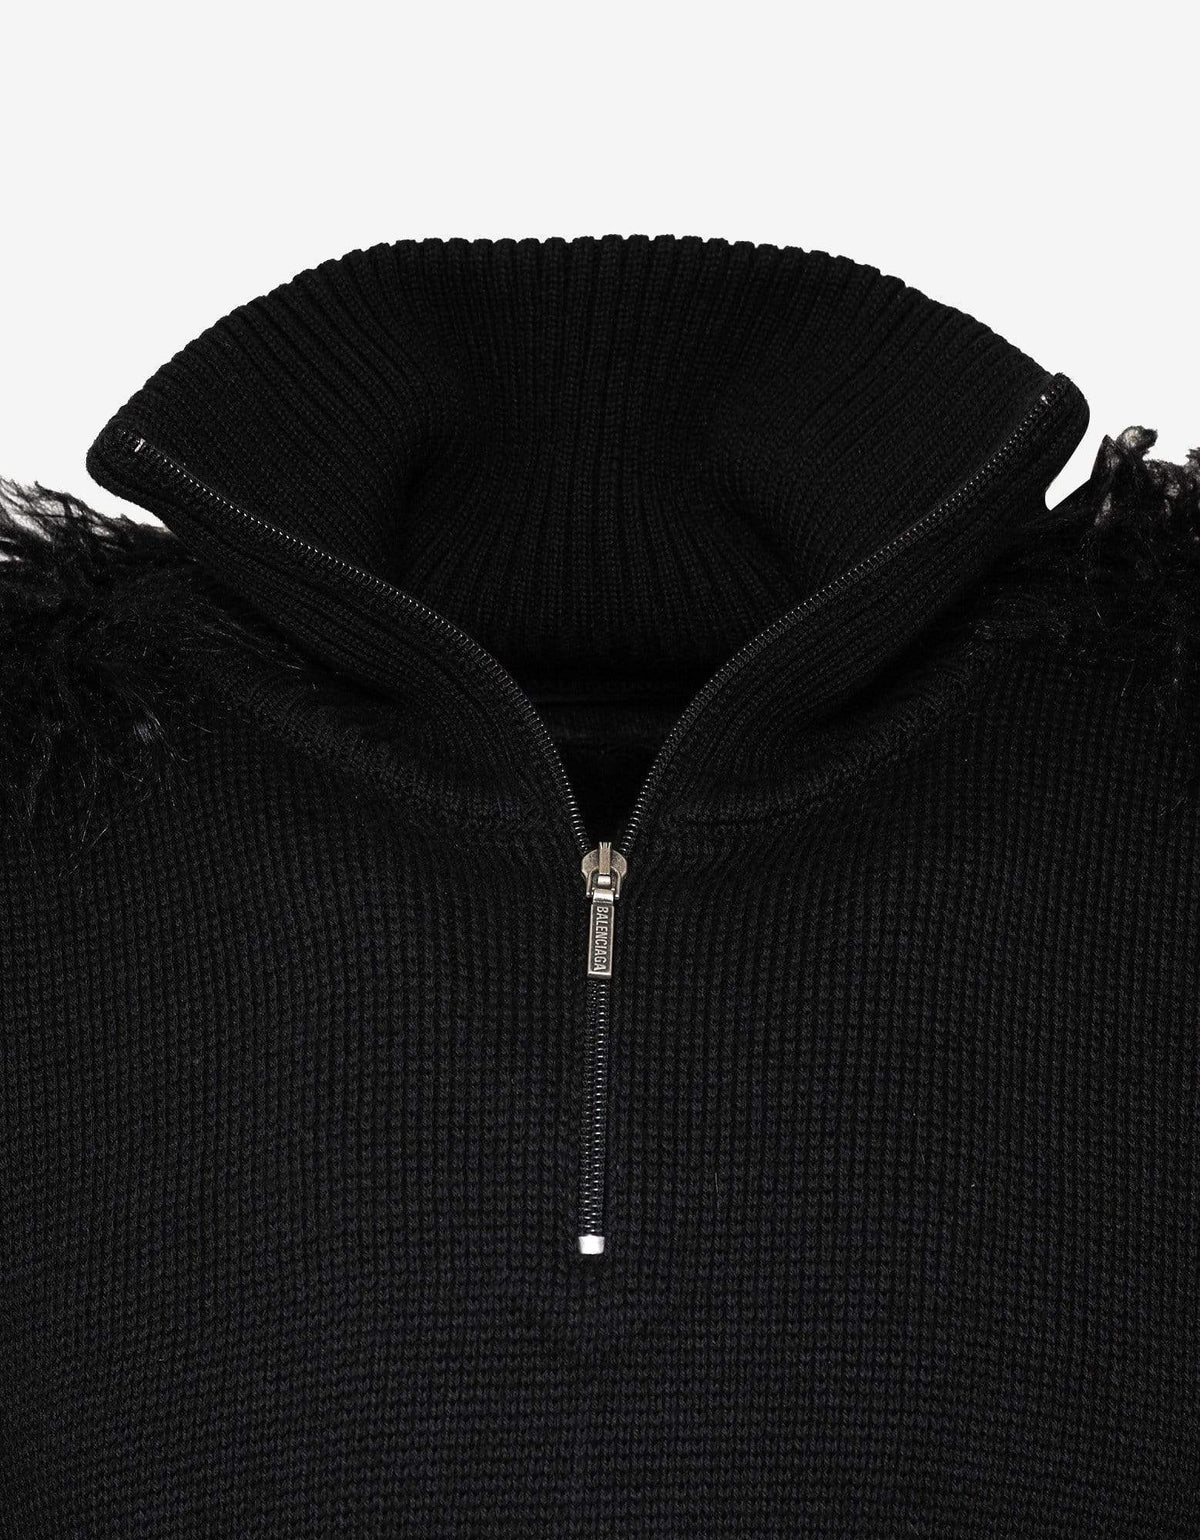 Balenciaga Black LGBTQ Flag Zip Up Turtleneck Sweater